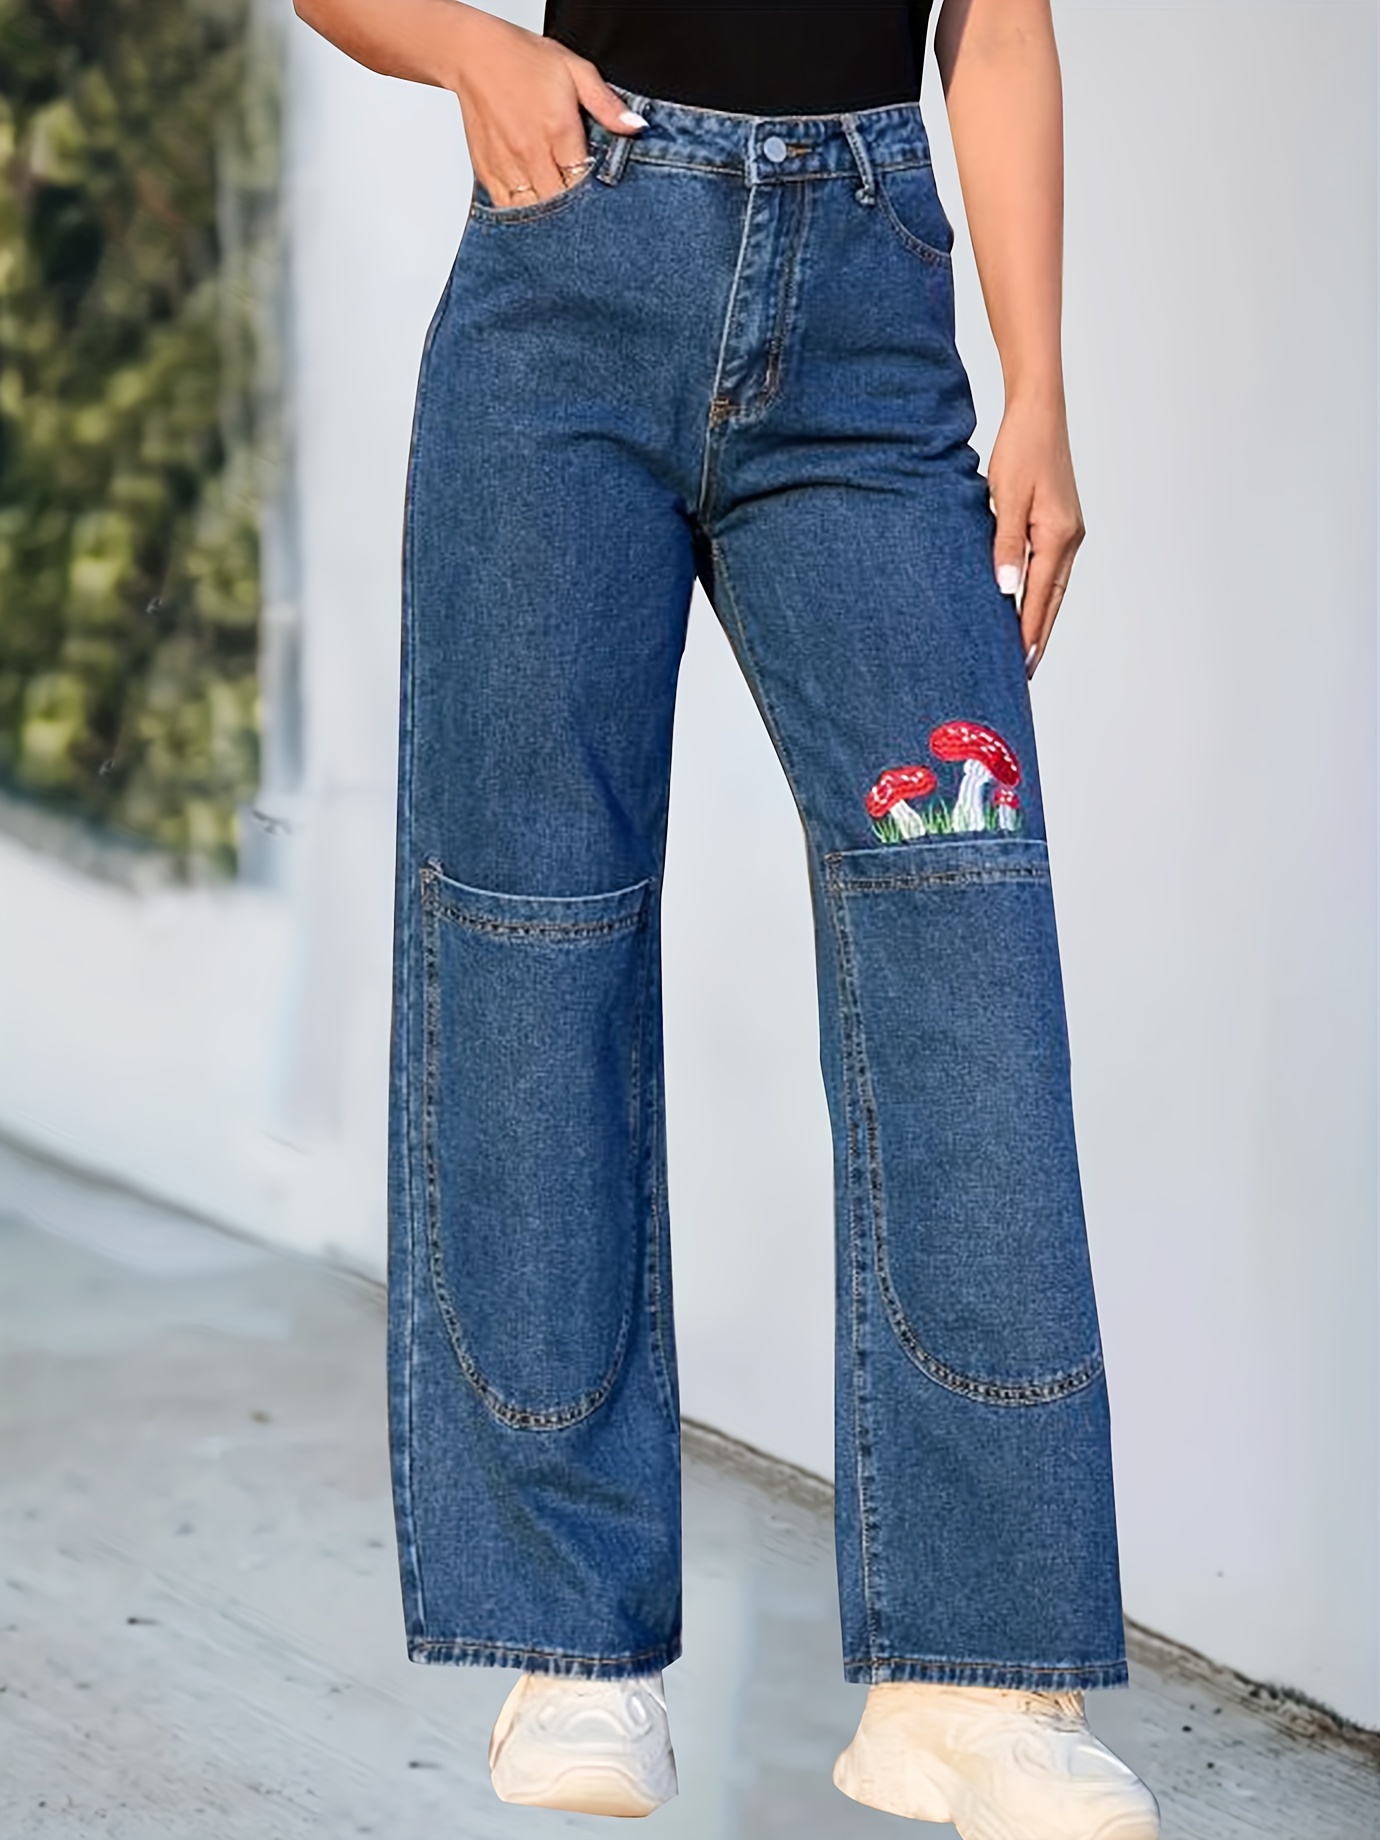 Contrast Color Casual Baggy Jeans, Loose Fit Floral Print Wide Legs Jeans,  Women's Denim Jeans & Clothing